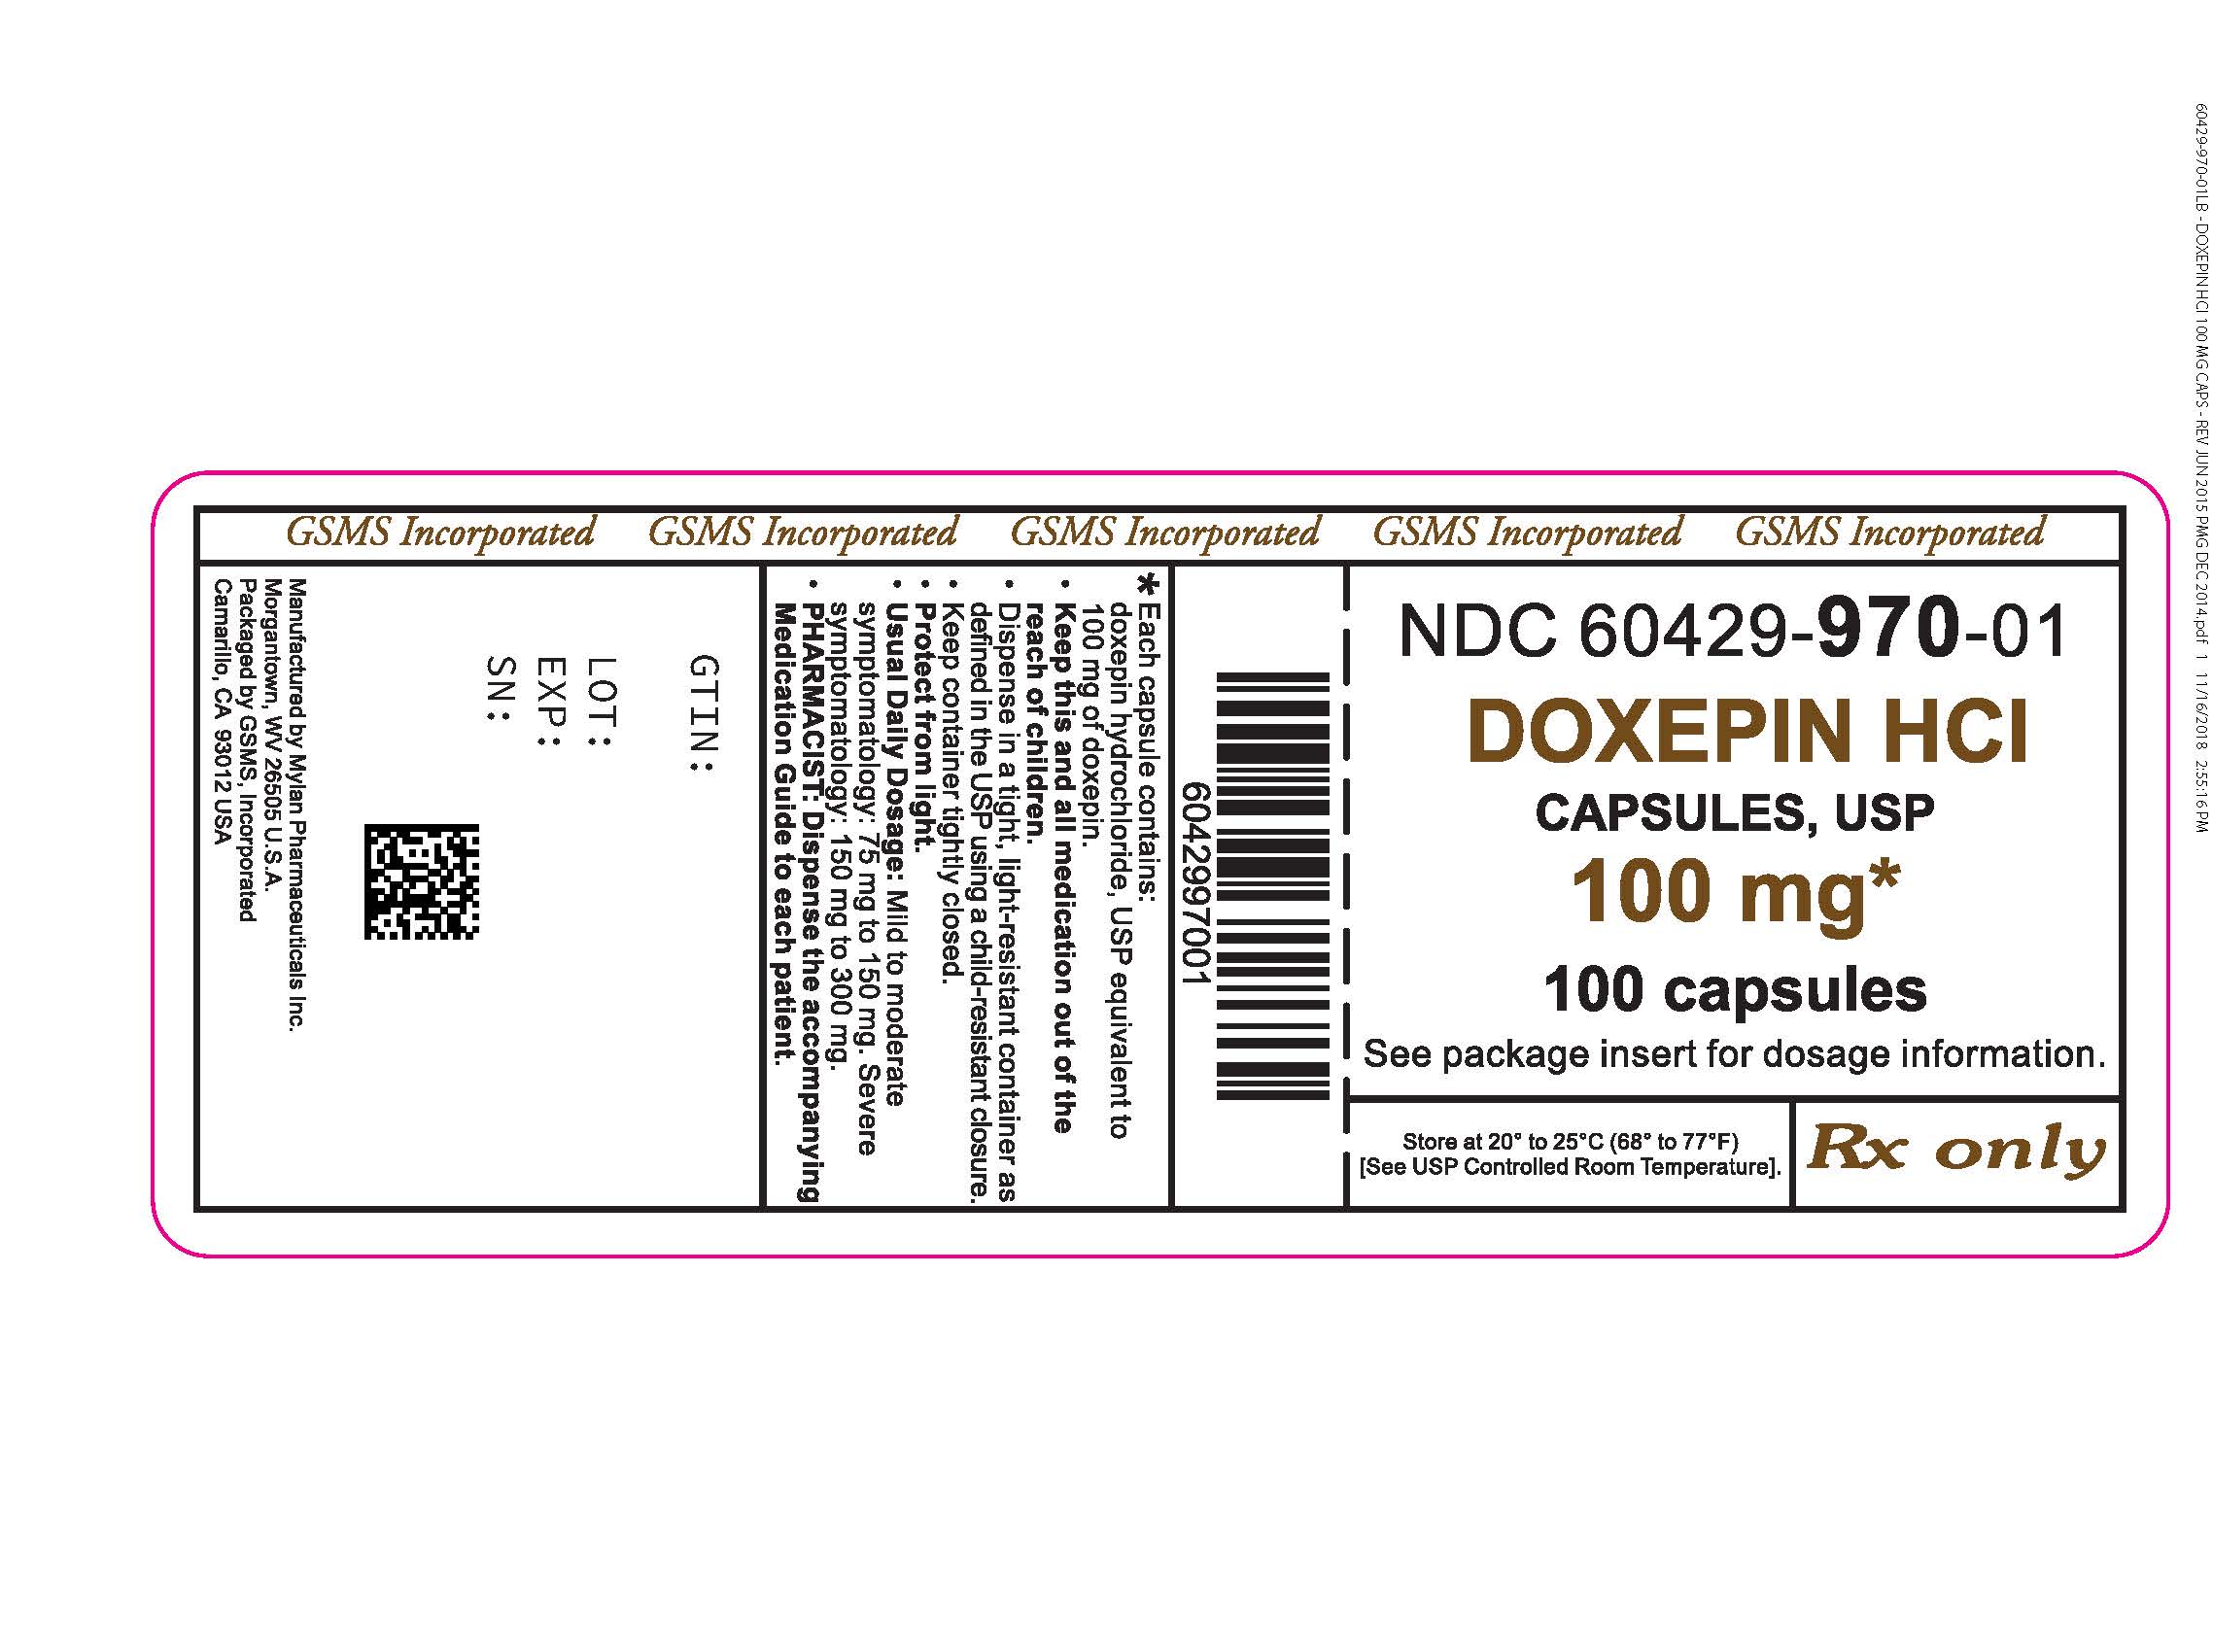 60429-970-01LB - DOXEPIN HCl 100 MG CAPS - REV JUN 2015 PMG DEC 2014.jpg